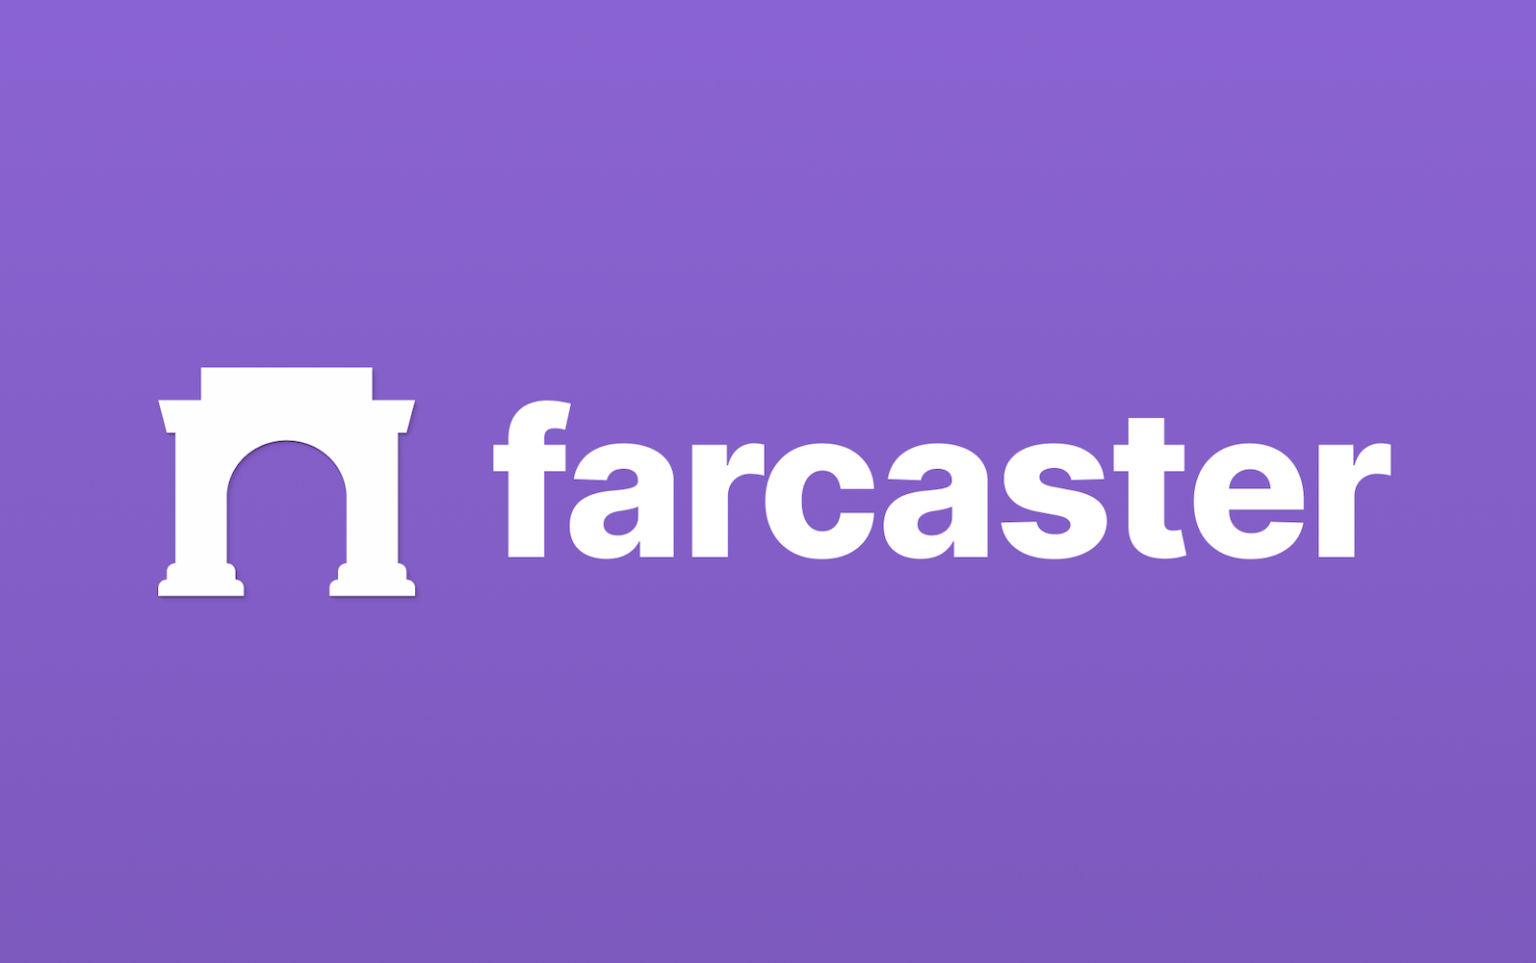 Farcaster، یک شبکه اجتماعی مبتنی بر رمزارز، تنها با ۸۰ هزار کاربر روزانه، ۱۵۰ میلیون دلار جمع آوری کرد